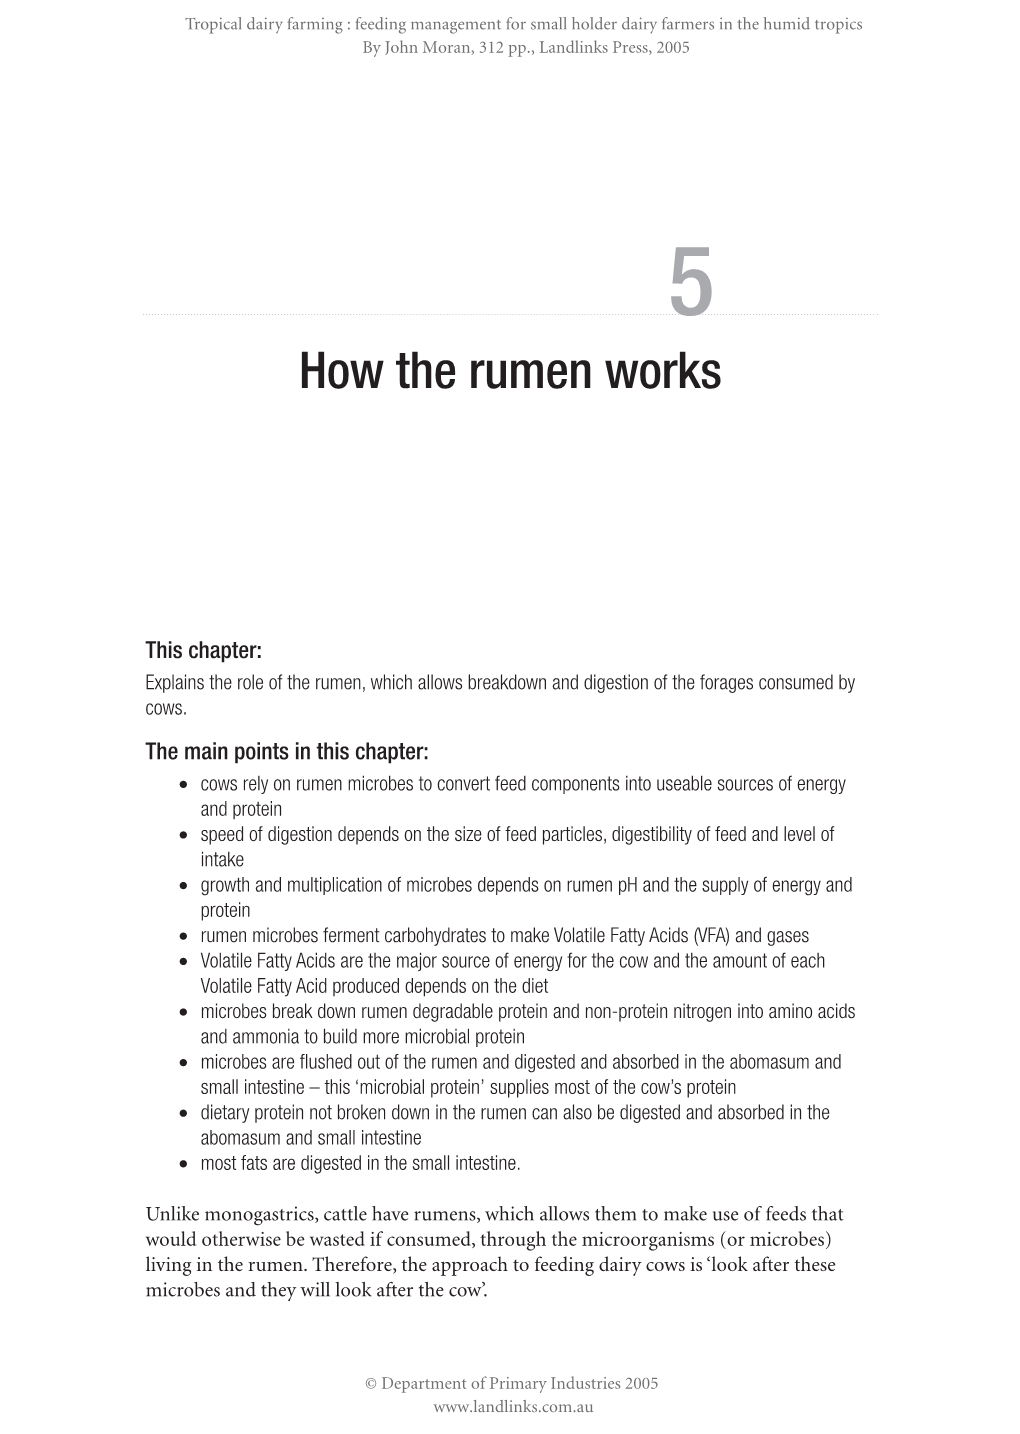 How the Rumen Works